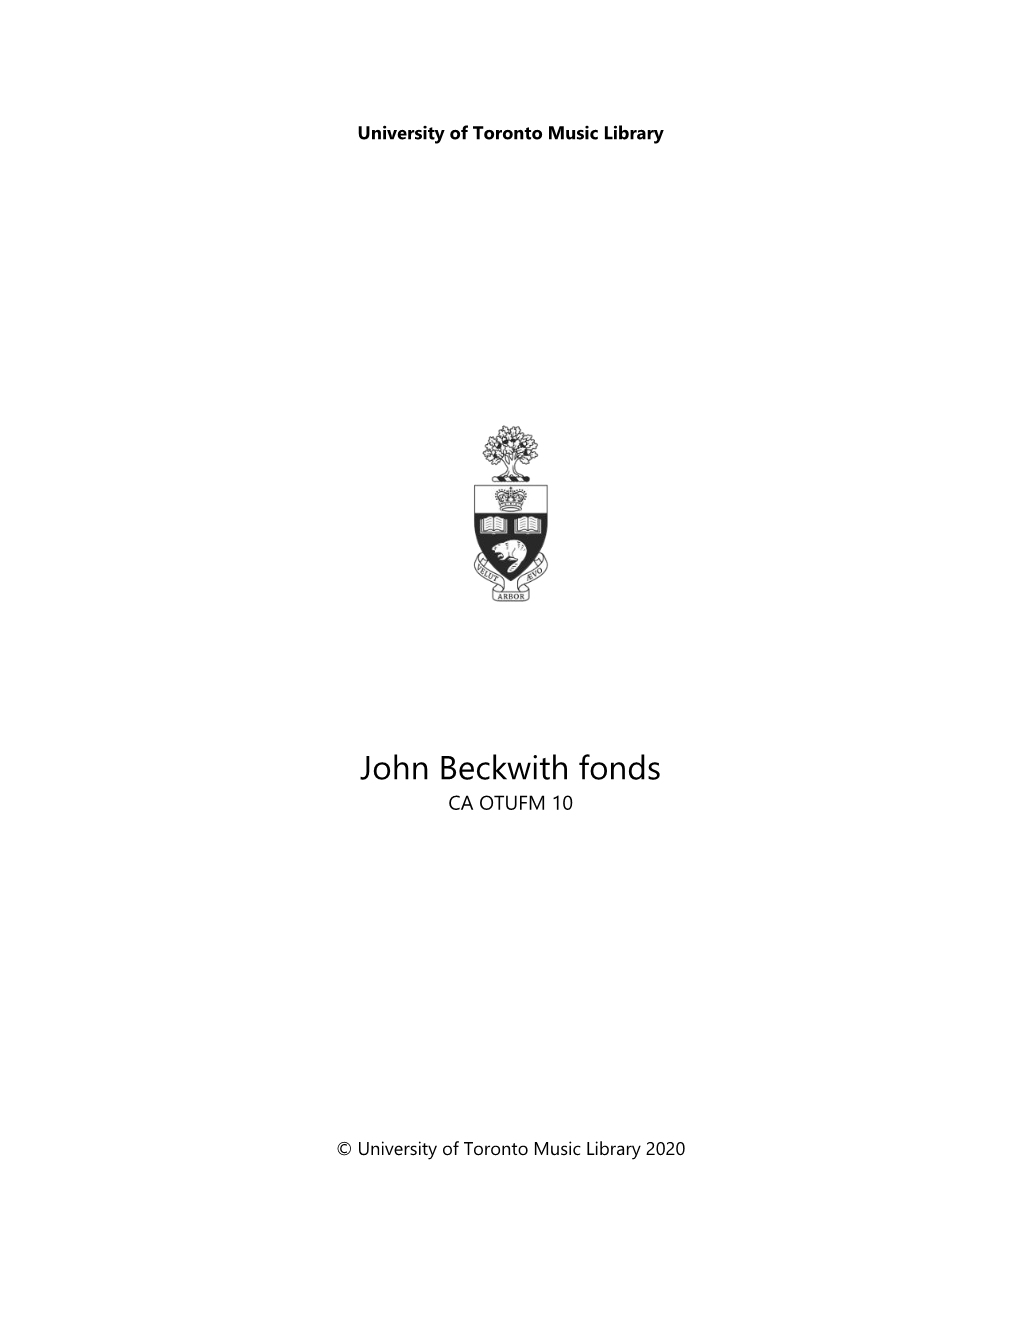 John Beckwith Fonds CA OTUFM 10